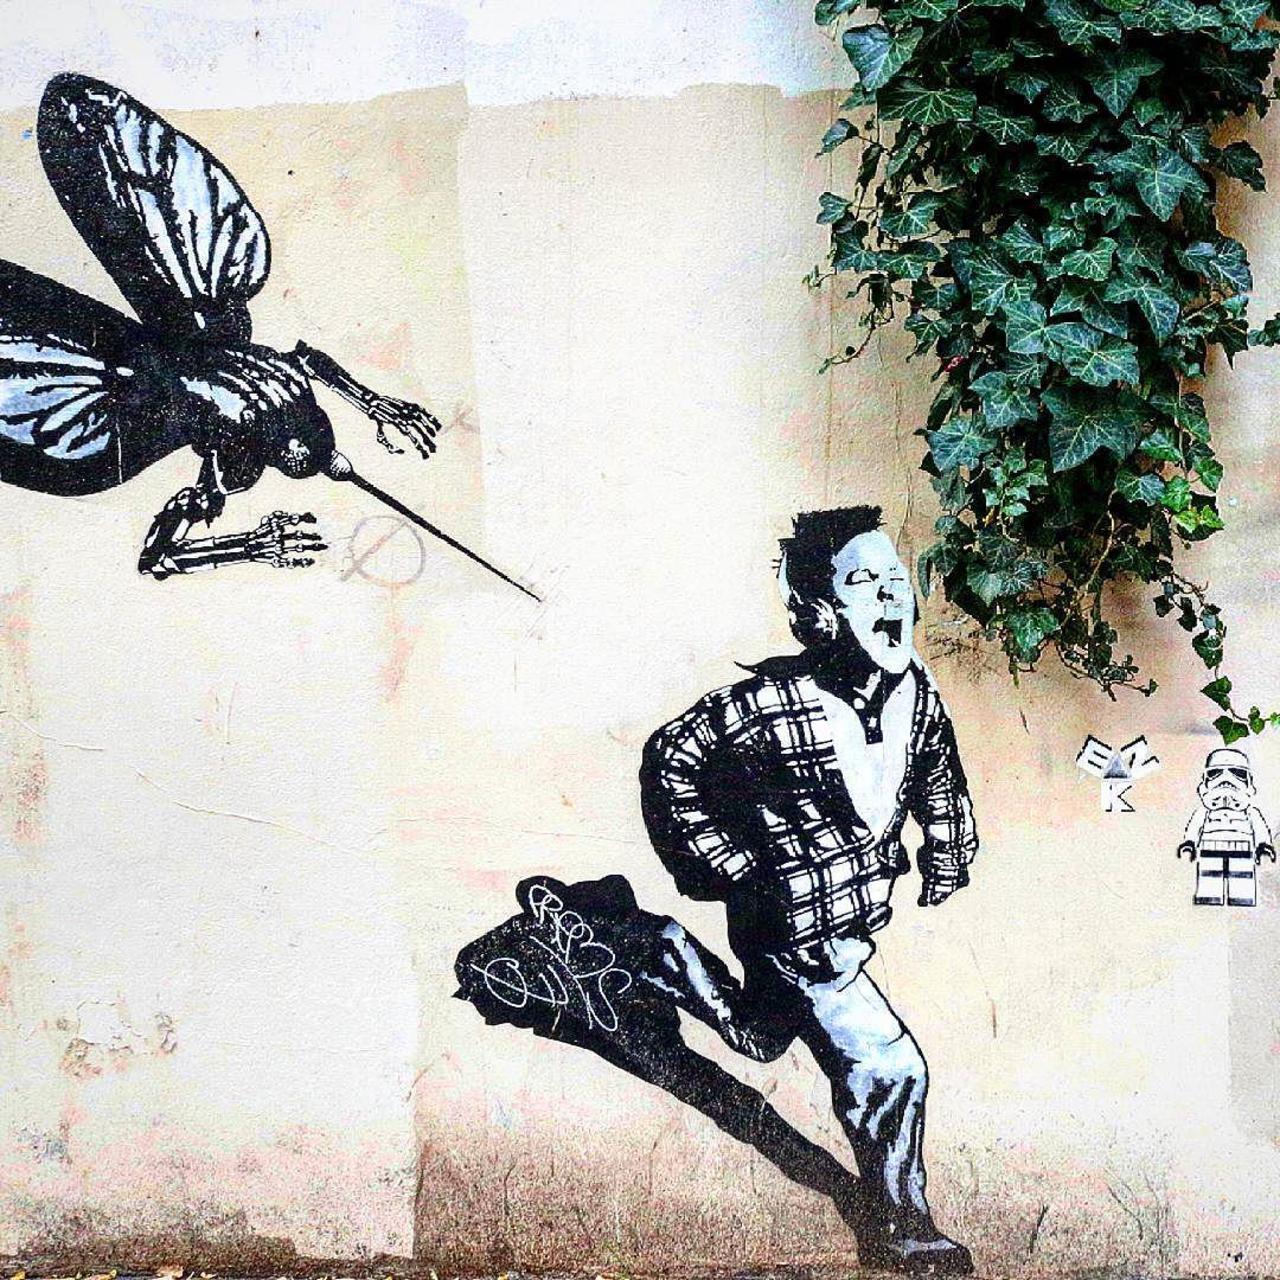 #Paris #graffiti photo by @jpoesse http://ift.tt/1GnkuuI #StreetArt https://t.co/Bs8Vm8LVyR